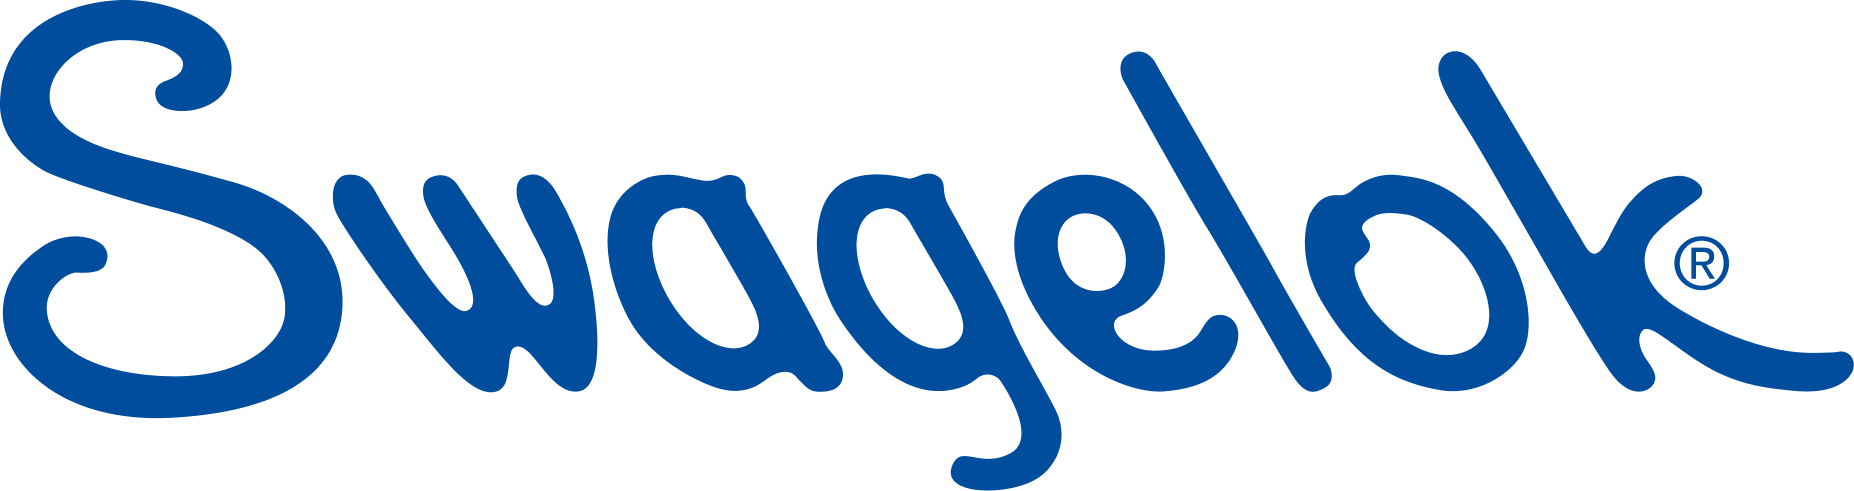 blue-header-logo-swagelok